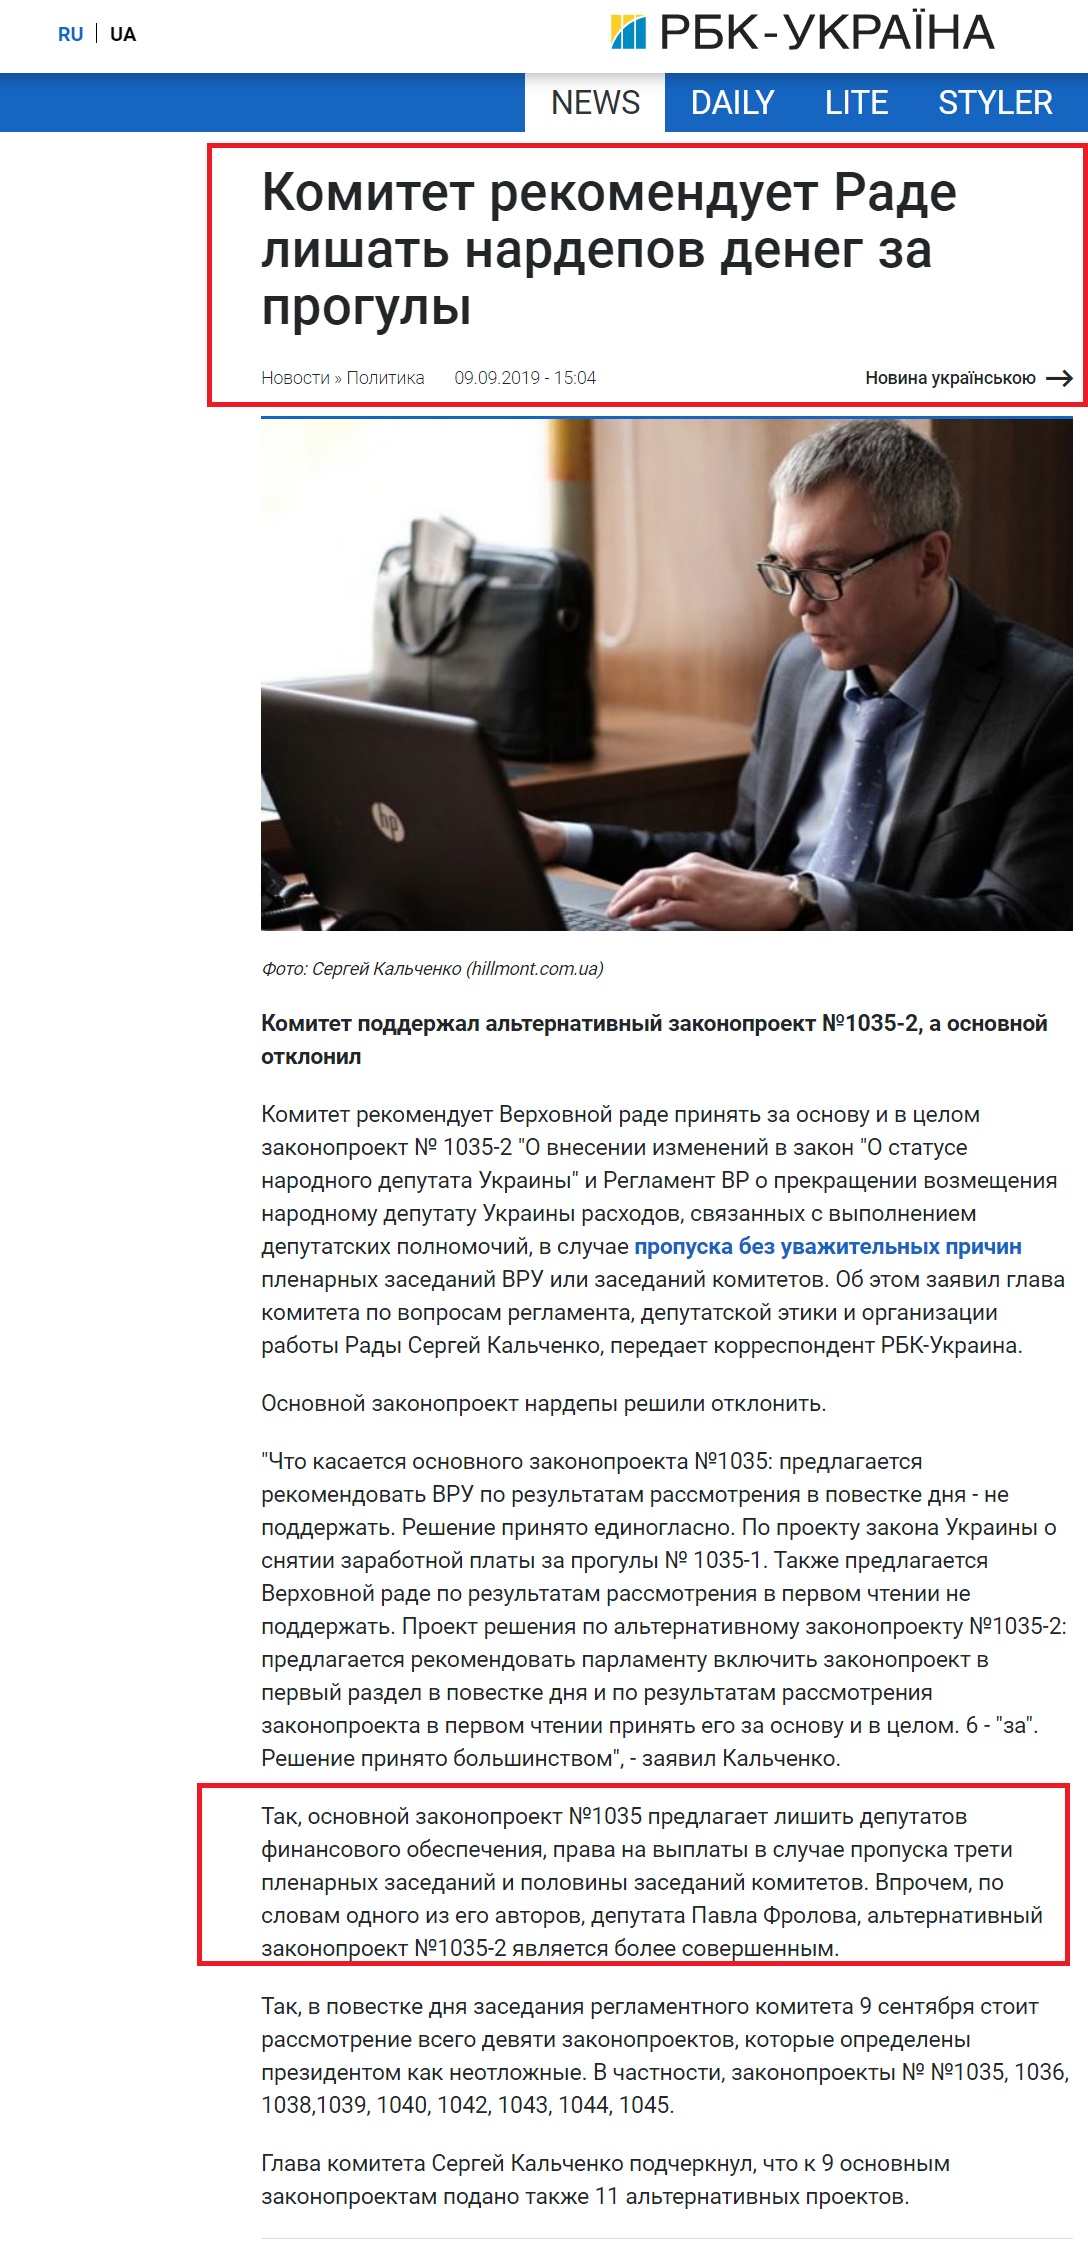 https://www.rbc.ua/ukr/news/komitet-rekomenduet-rade-lishat-nardepov-1568030633.html